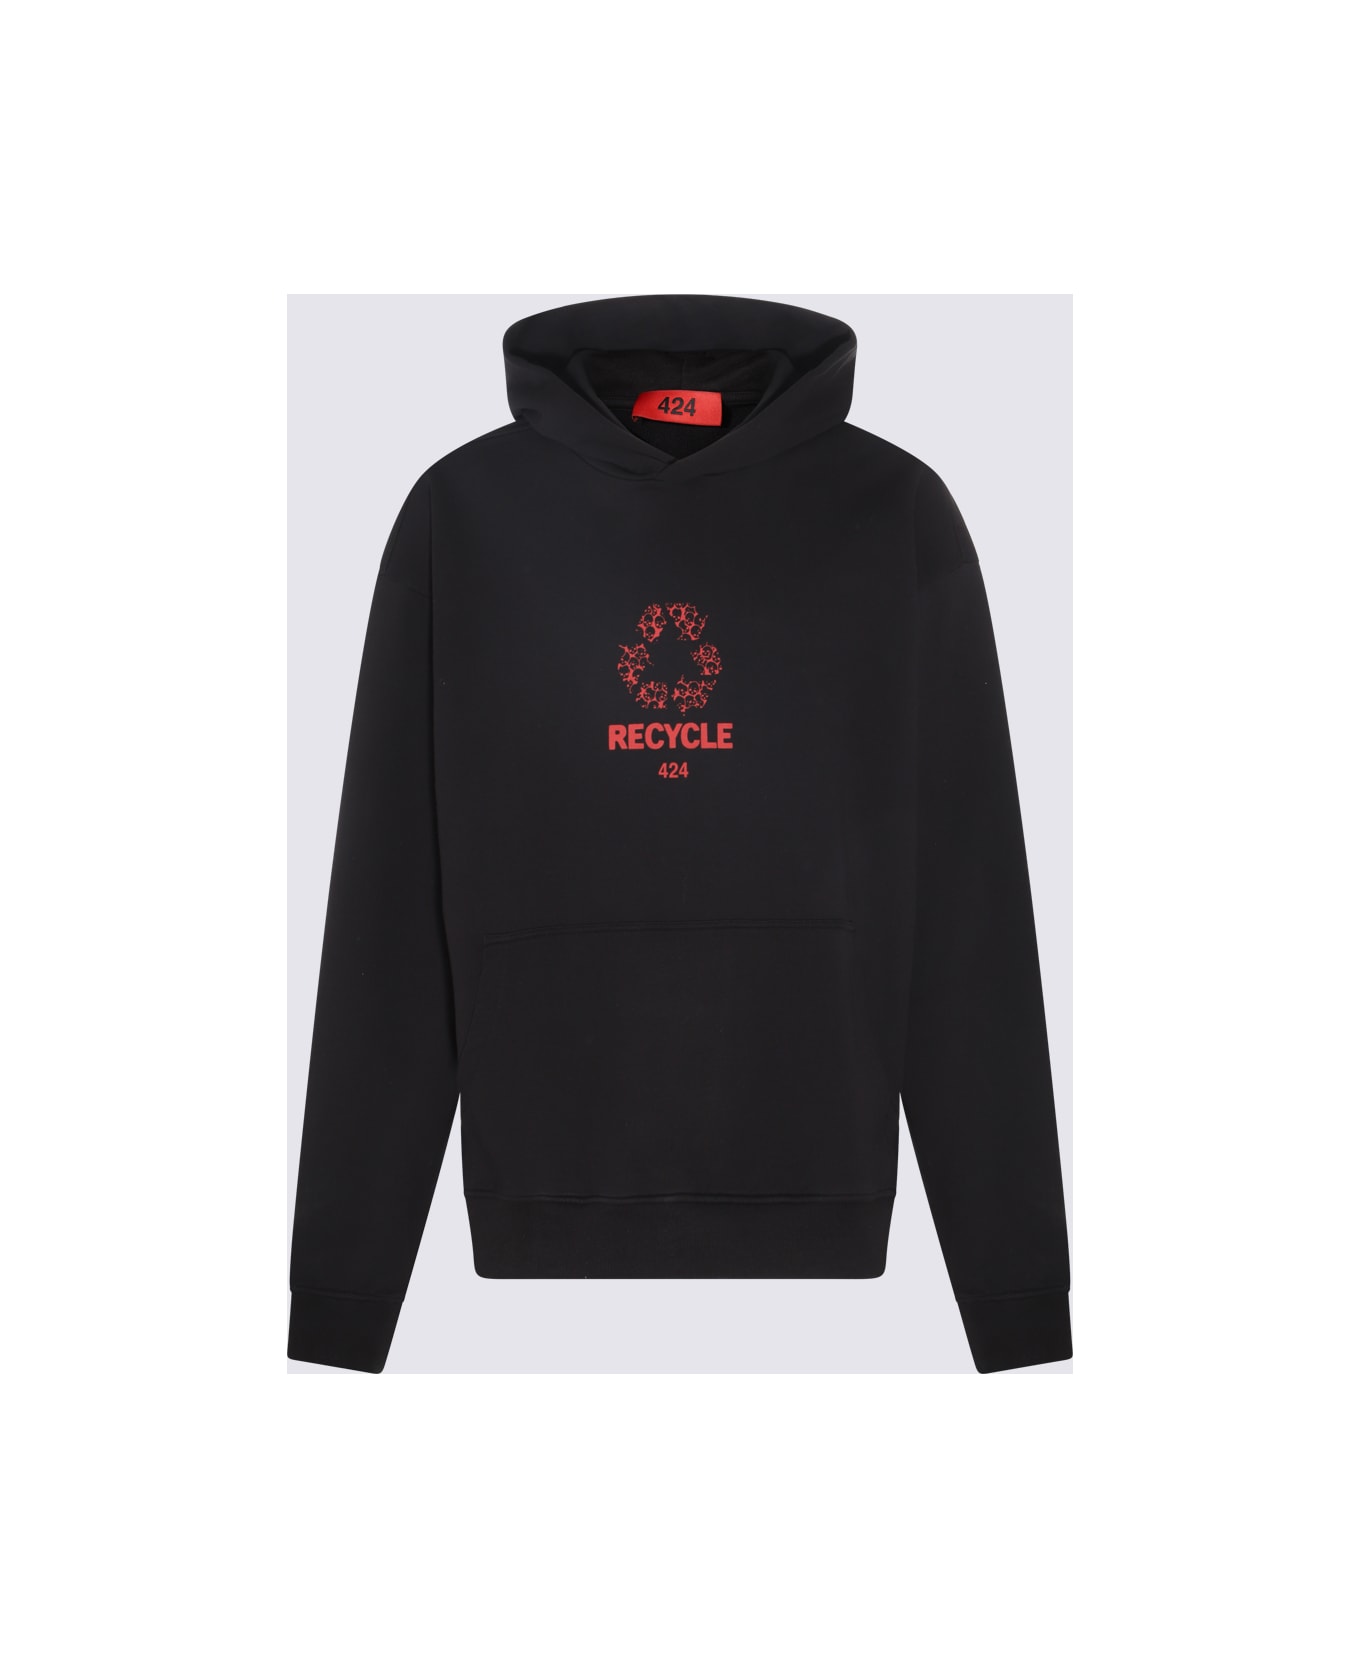 FourTwoFour on Fairfax Black And Red Cotton Blend Sweatshirt - Black